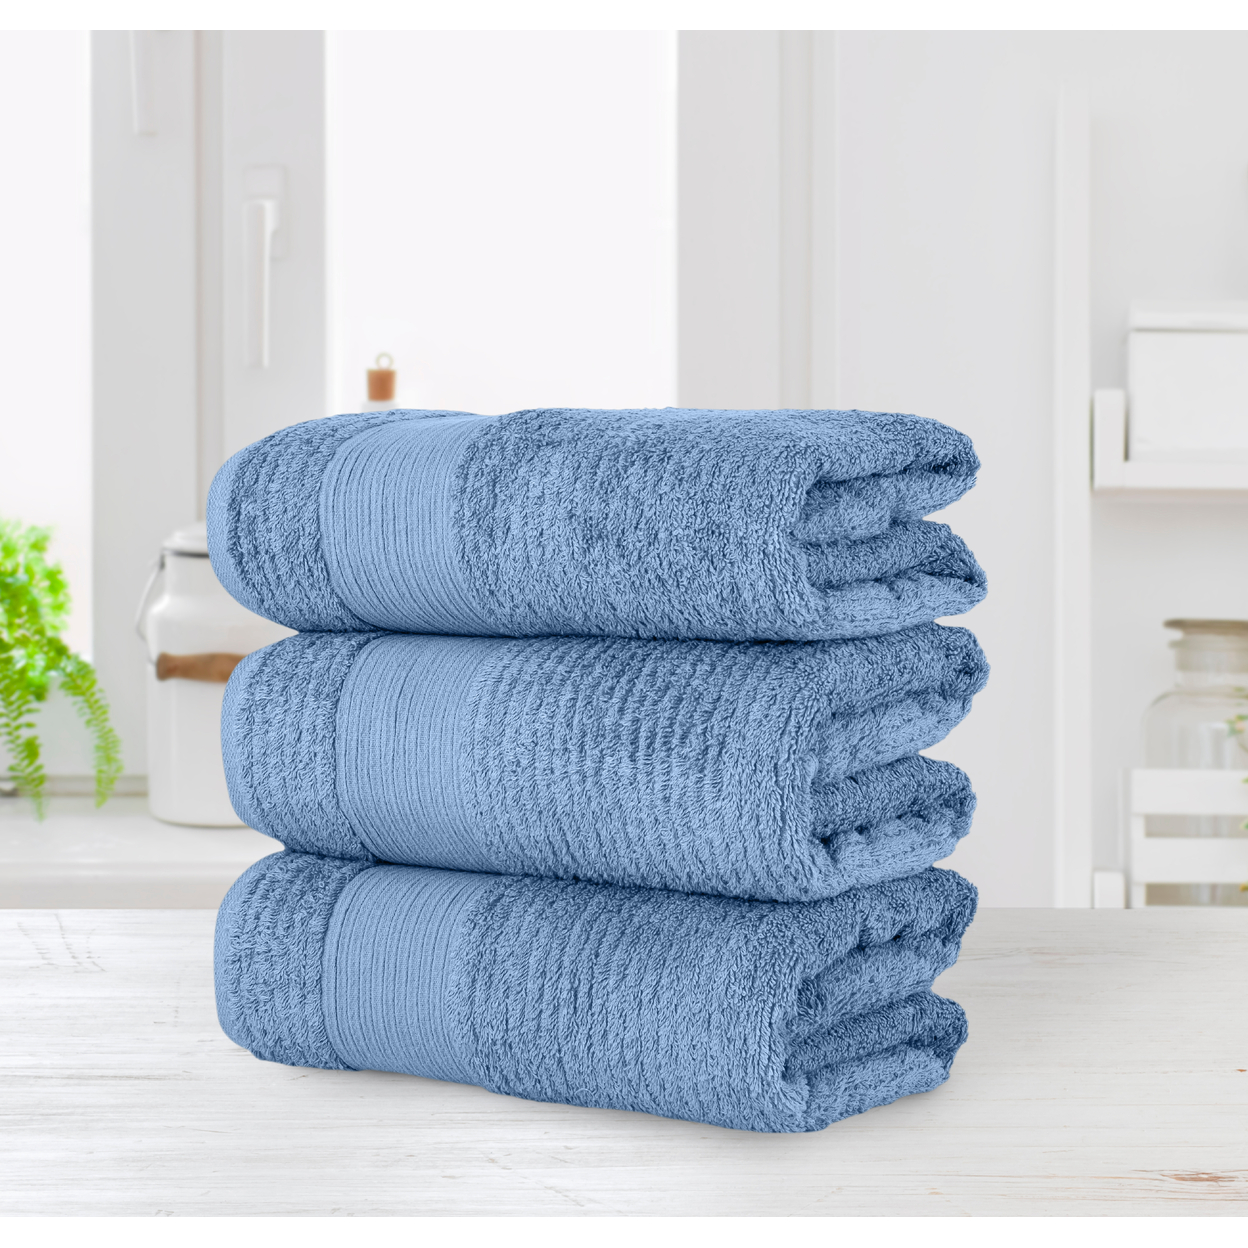 Chic Home Luxurious 3-Piece 100% Pure Turkish Cotton Bath Towels, 30 X 60, Jacquard Weave Design, OEKO-TEX Certified Set - Blue